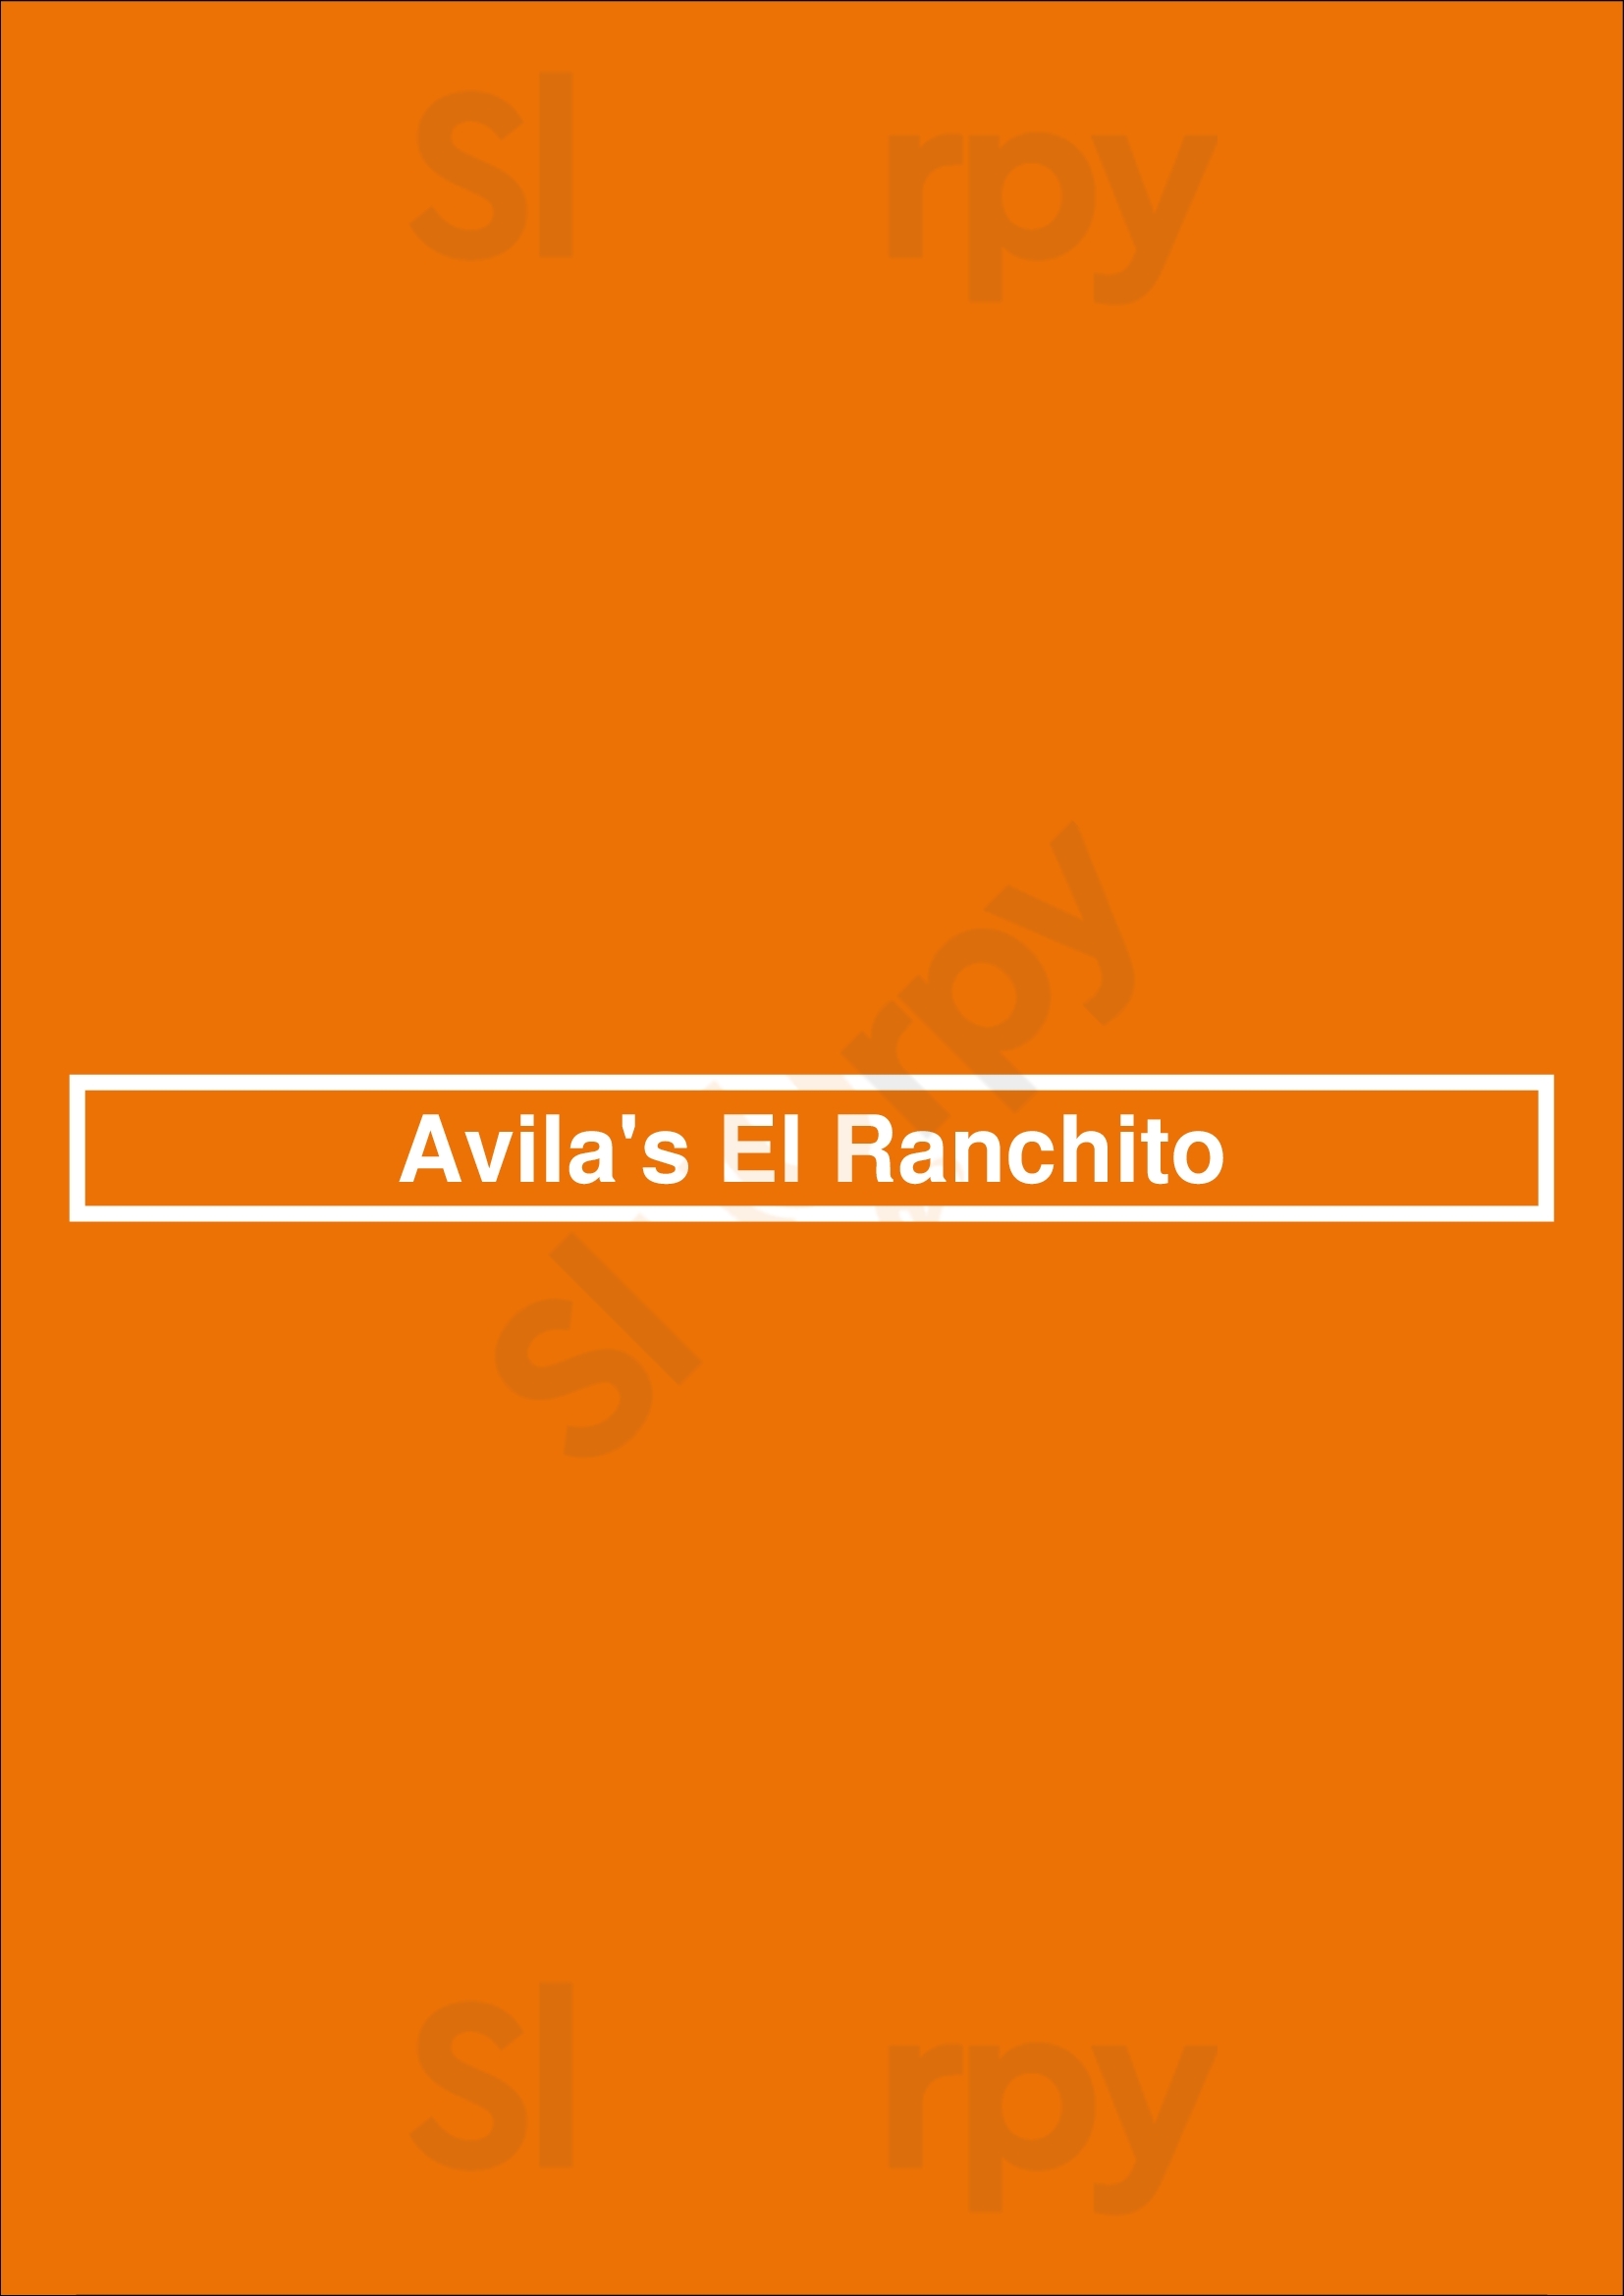 Avila's El Ranchito Huntington Beach Menu - 1